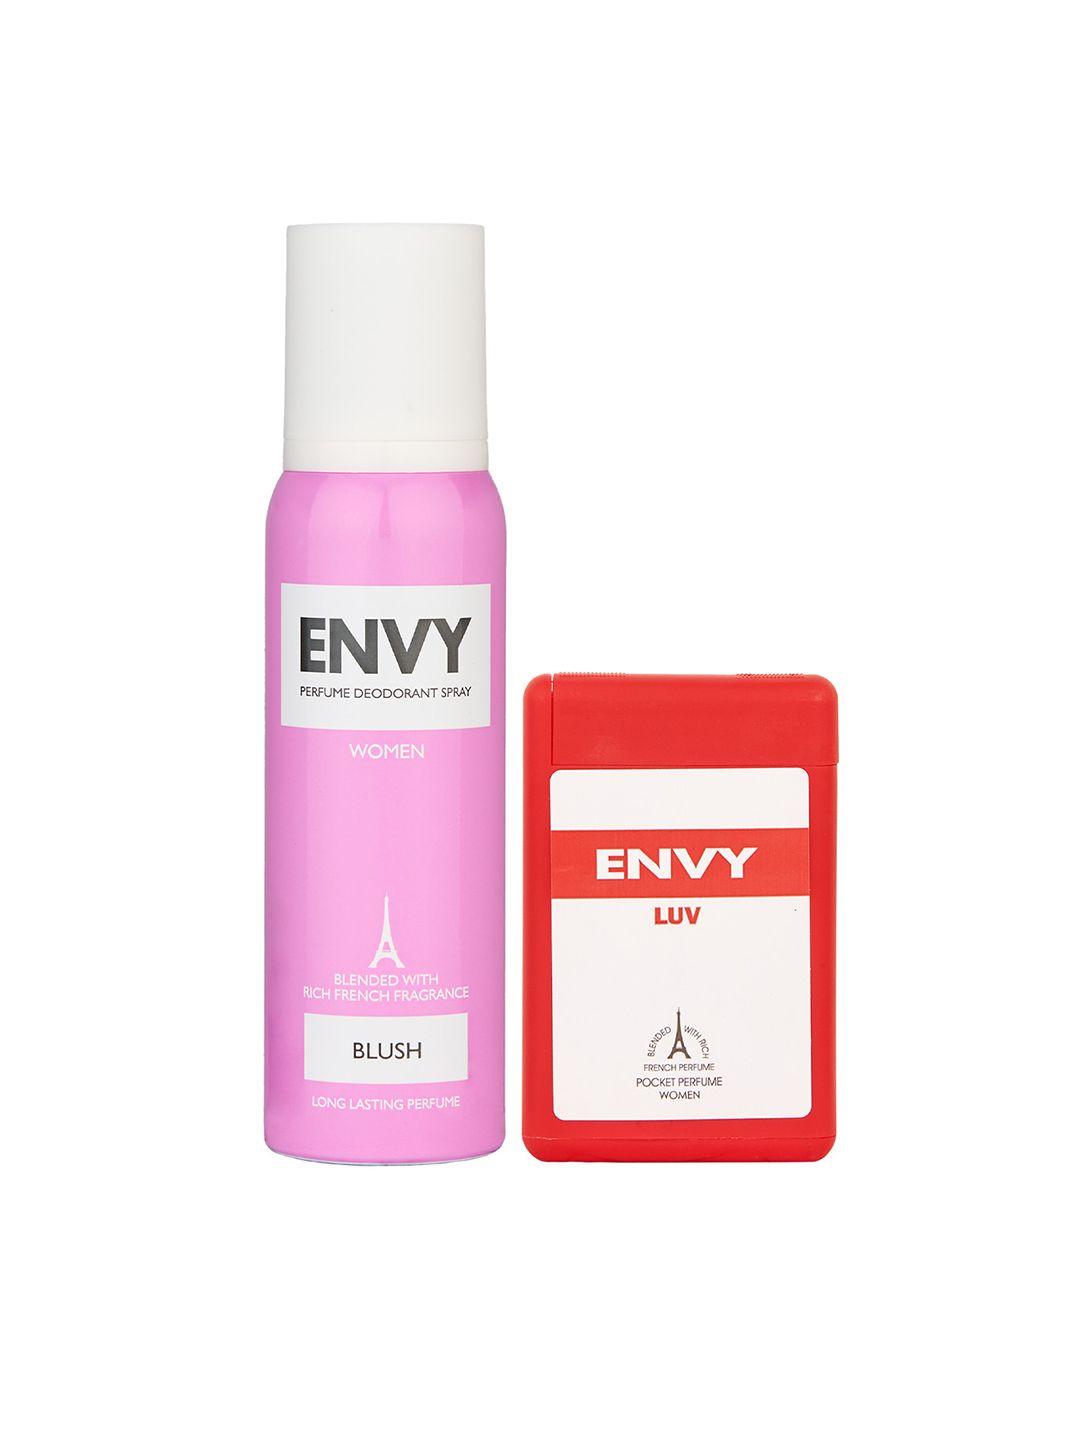 envy-women-blush-perfume-deodorant-115g-&-luv-pocket-perfume-18ml-combo